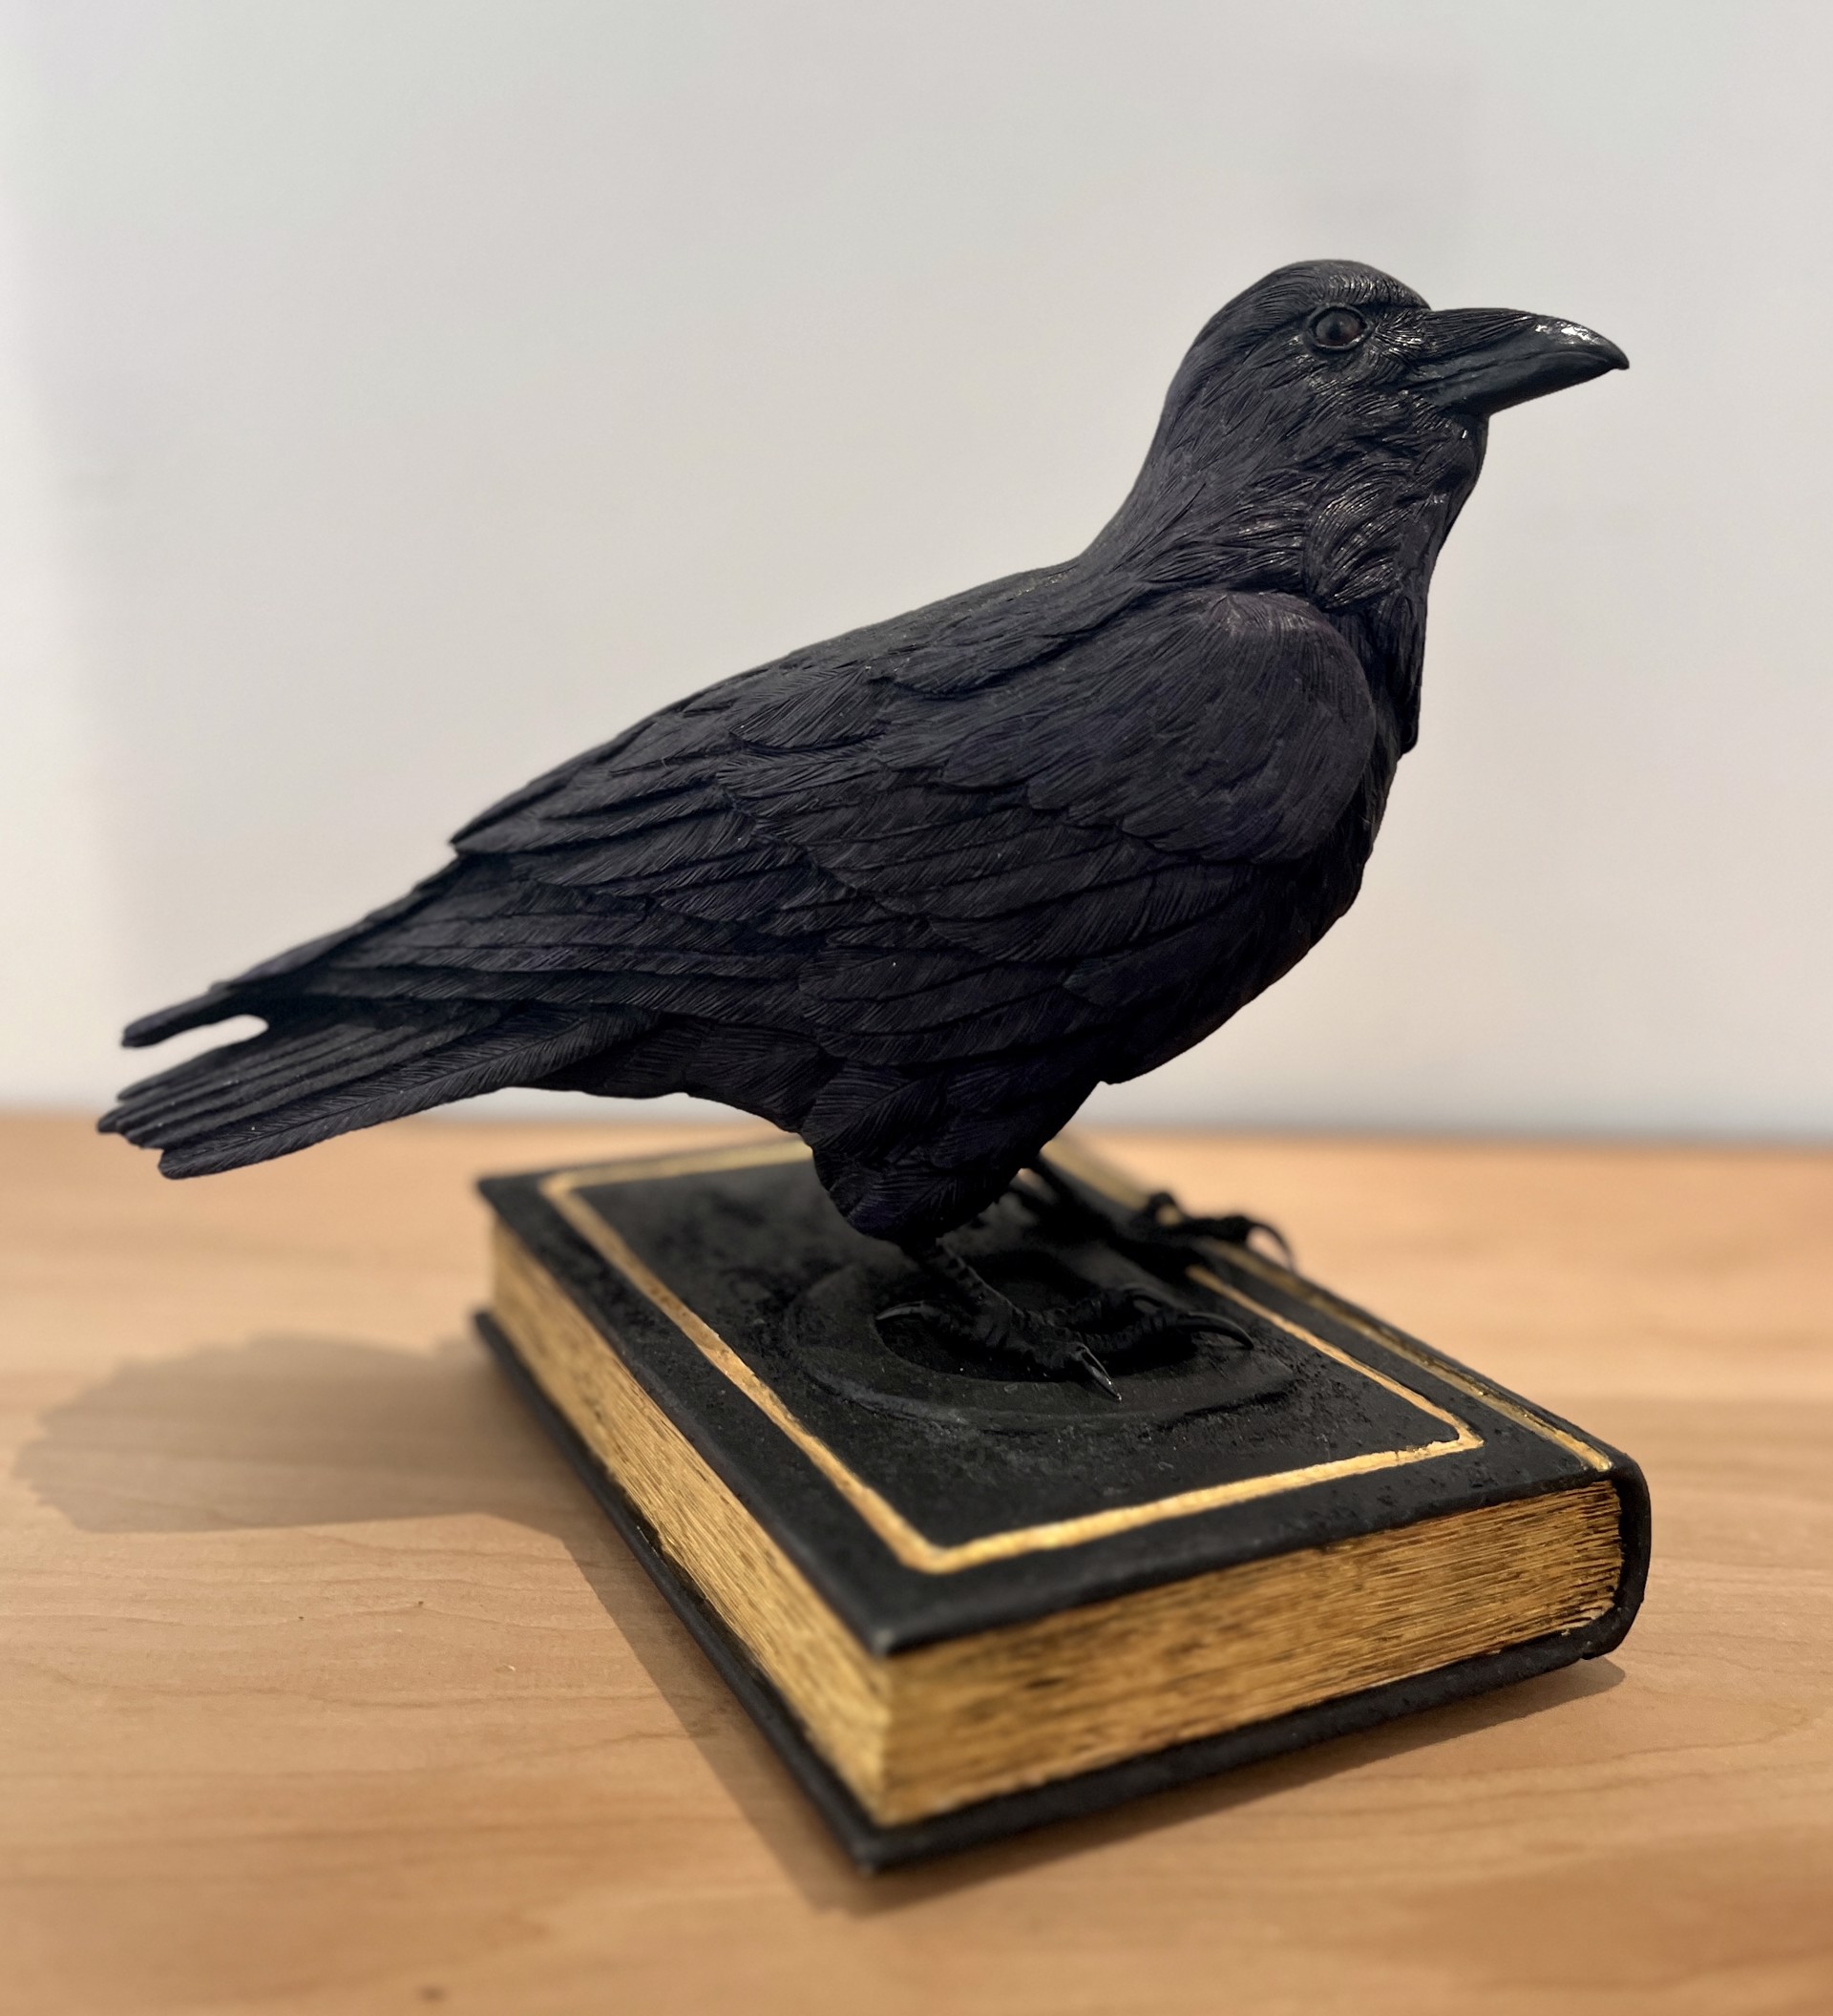 The Raven by Paul Morrisette